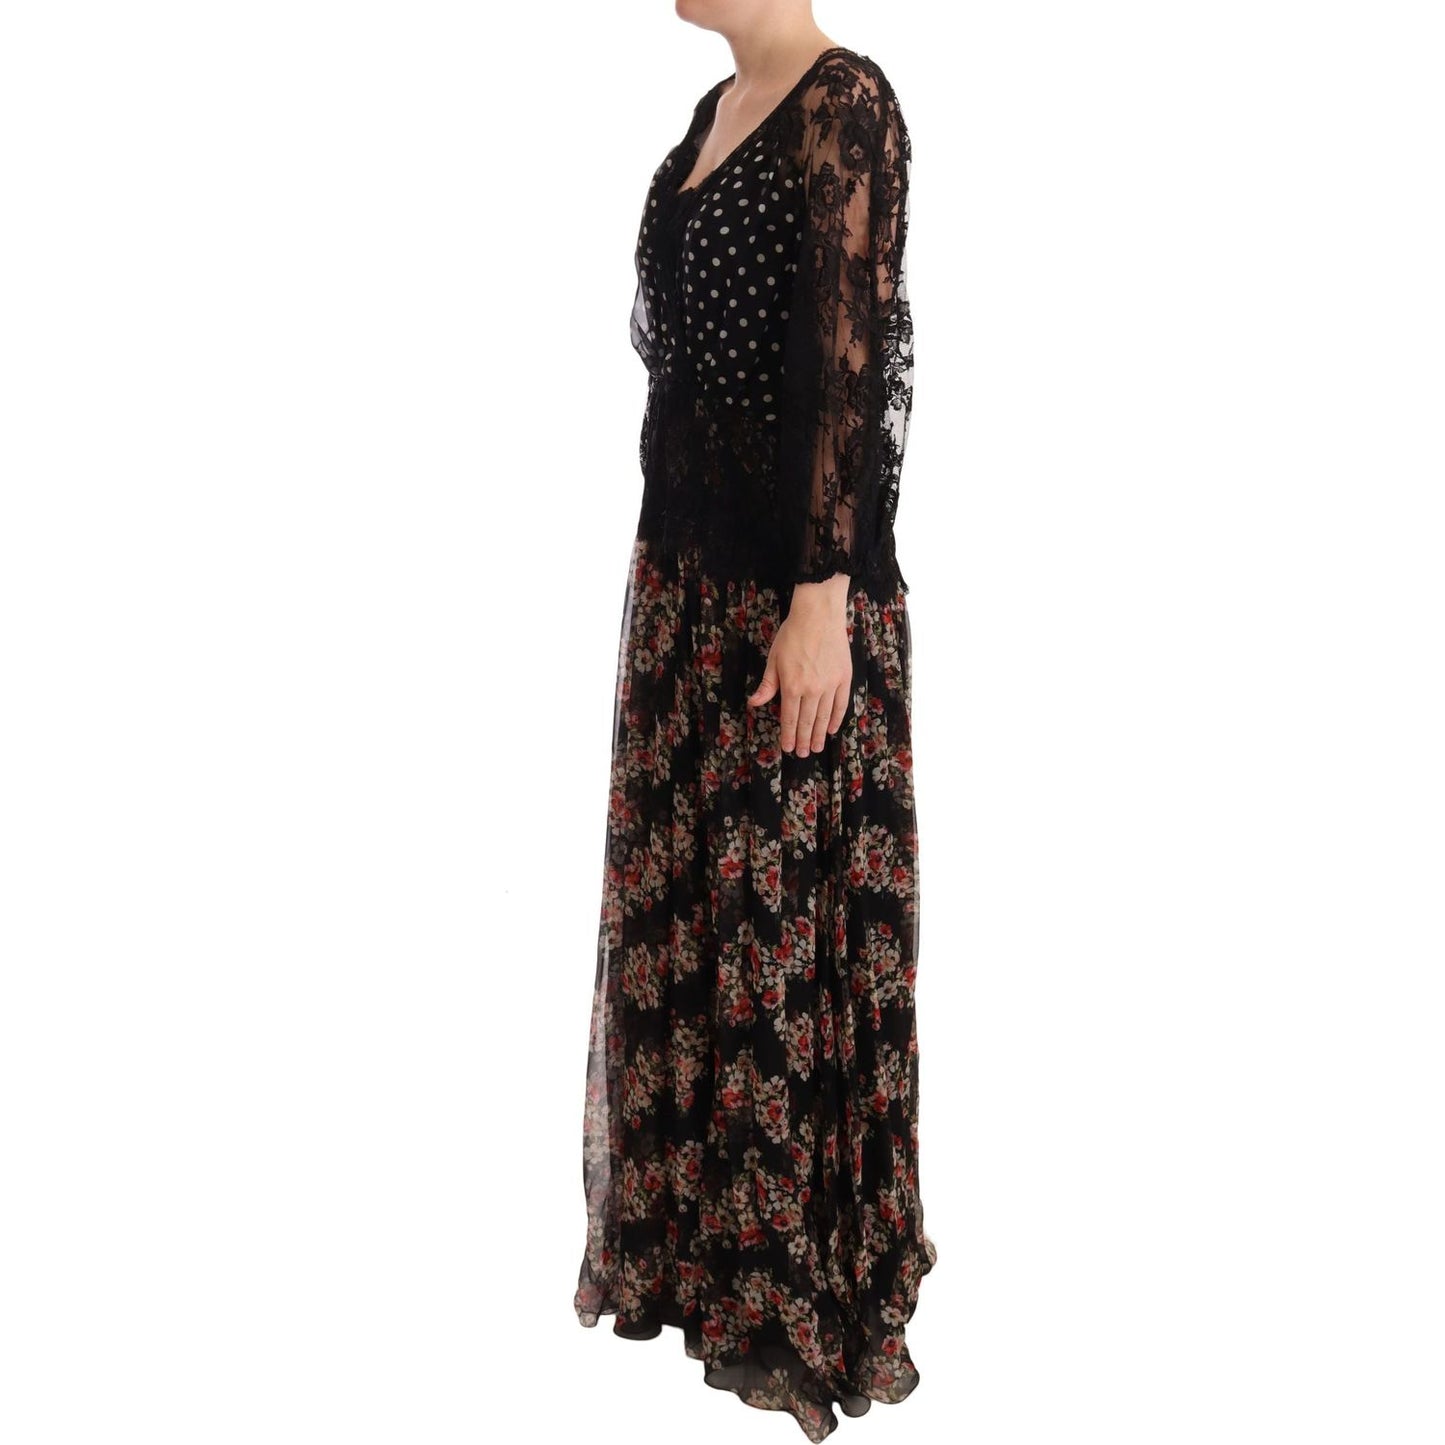 Dolce & Gabbana Elegant Lace Floral Maxi Dress with Polka Dots WOMAN DRESSES black-lace-floral-polka-maxi-capri-dress